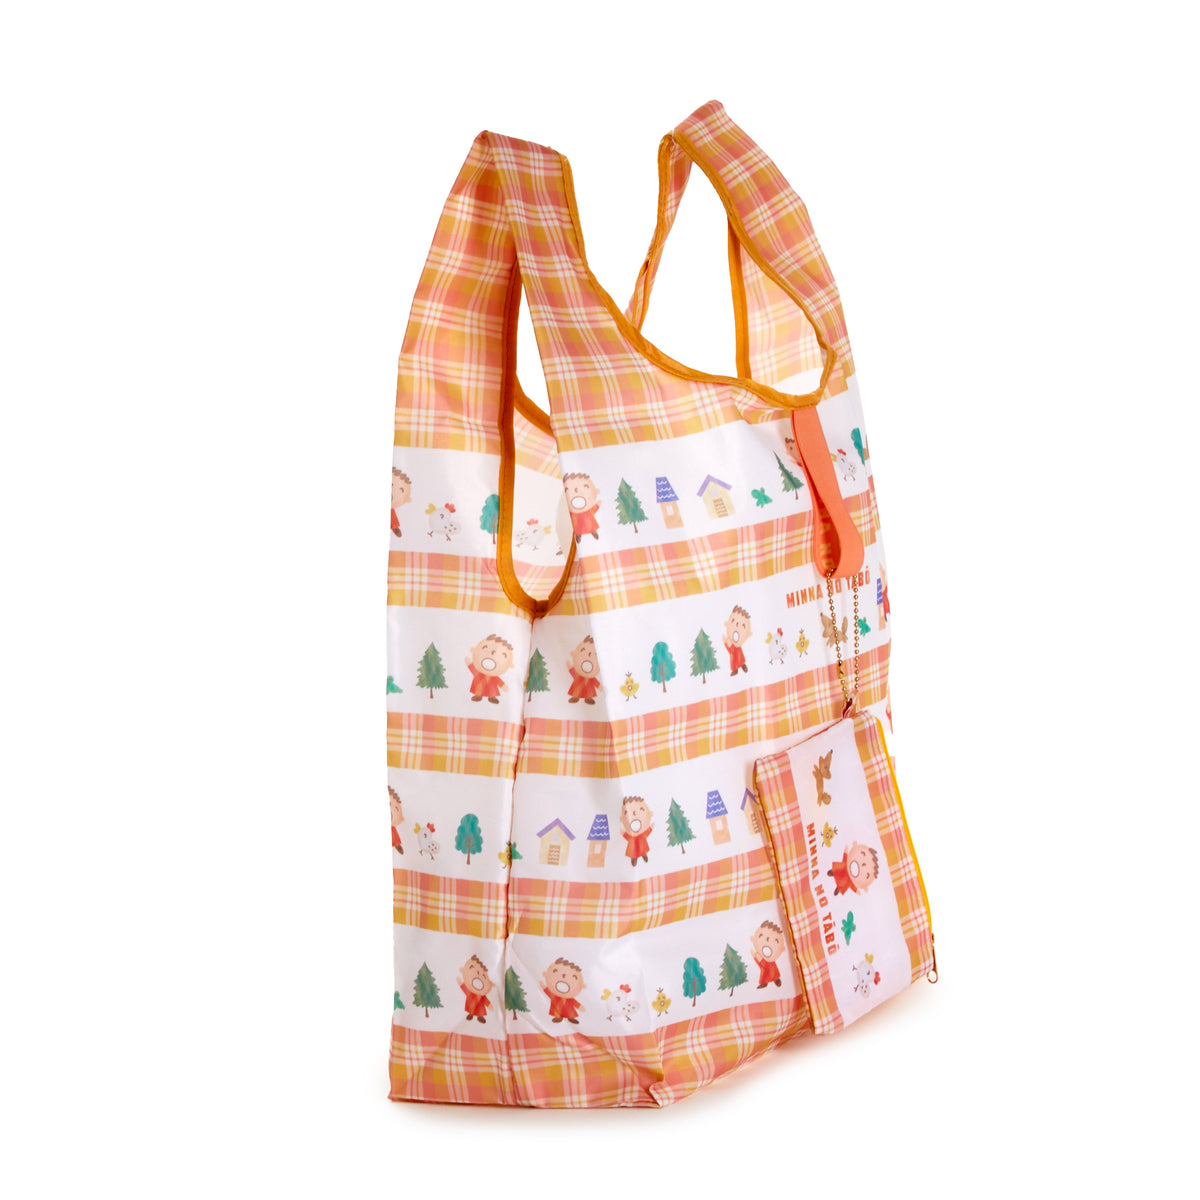 Minna no Tabo Reusable Tote (Orange Plaid Series) Bags Global Original   